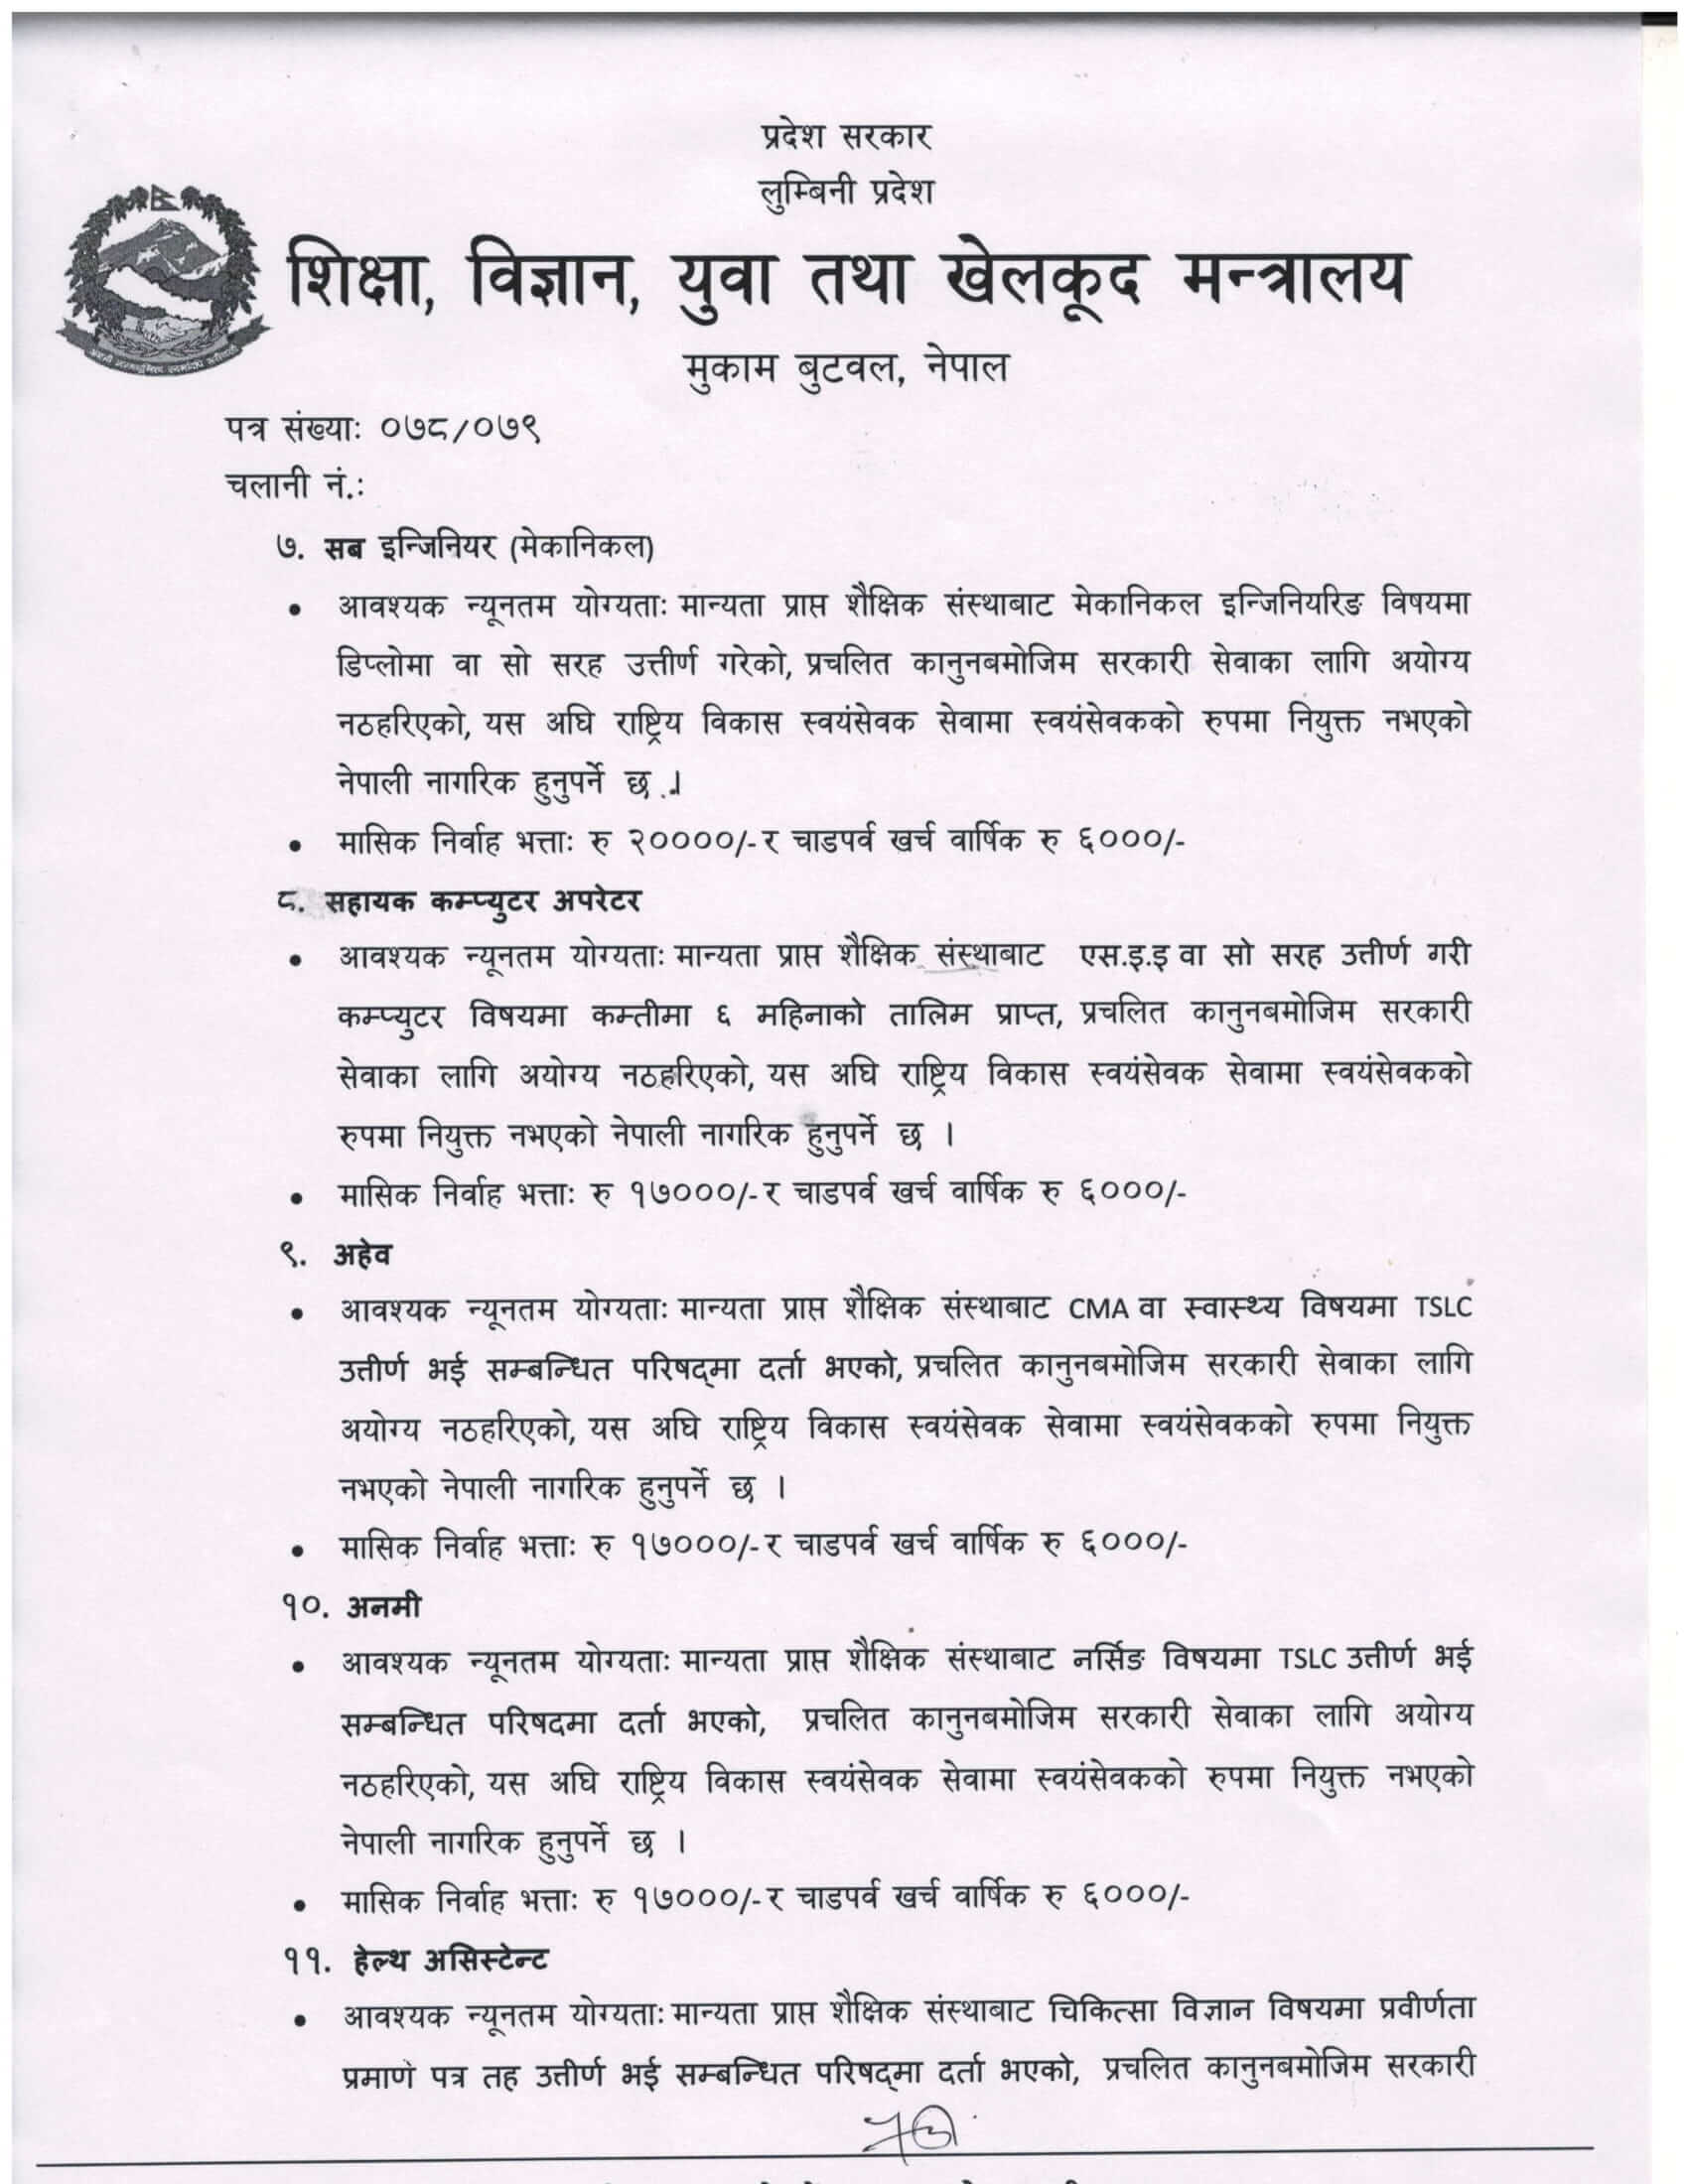 Lumbini Pradesh Ministry of Education Vacancy for Volunteer